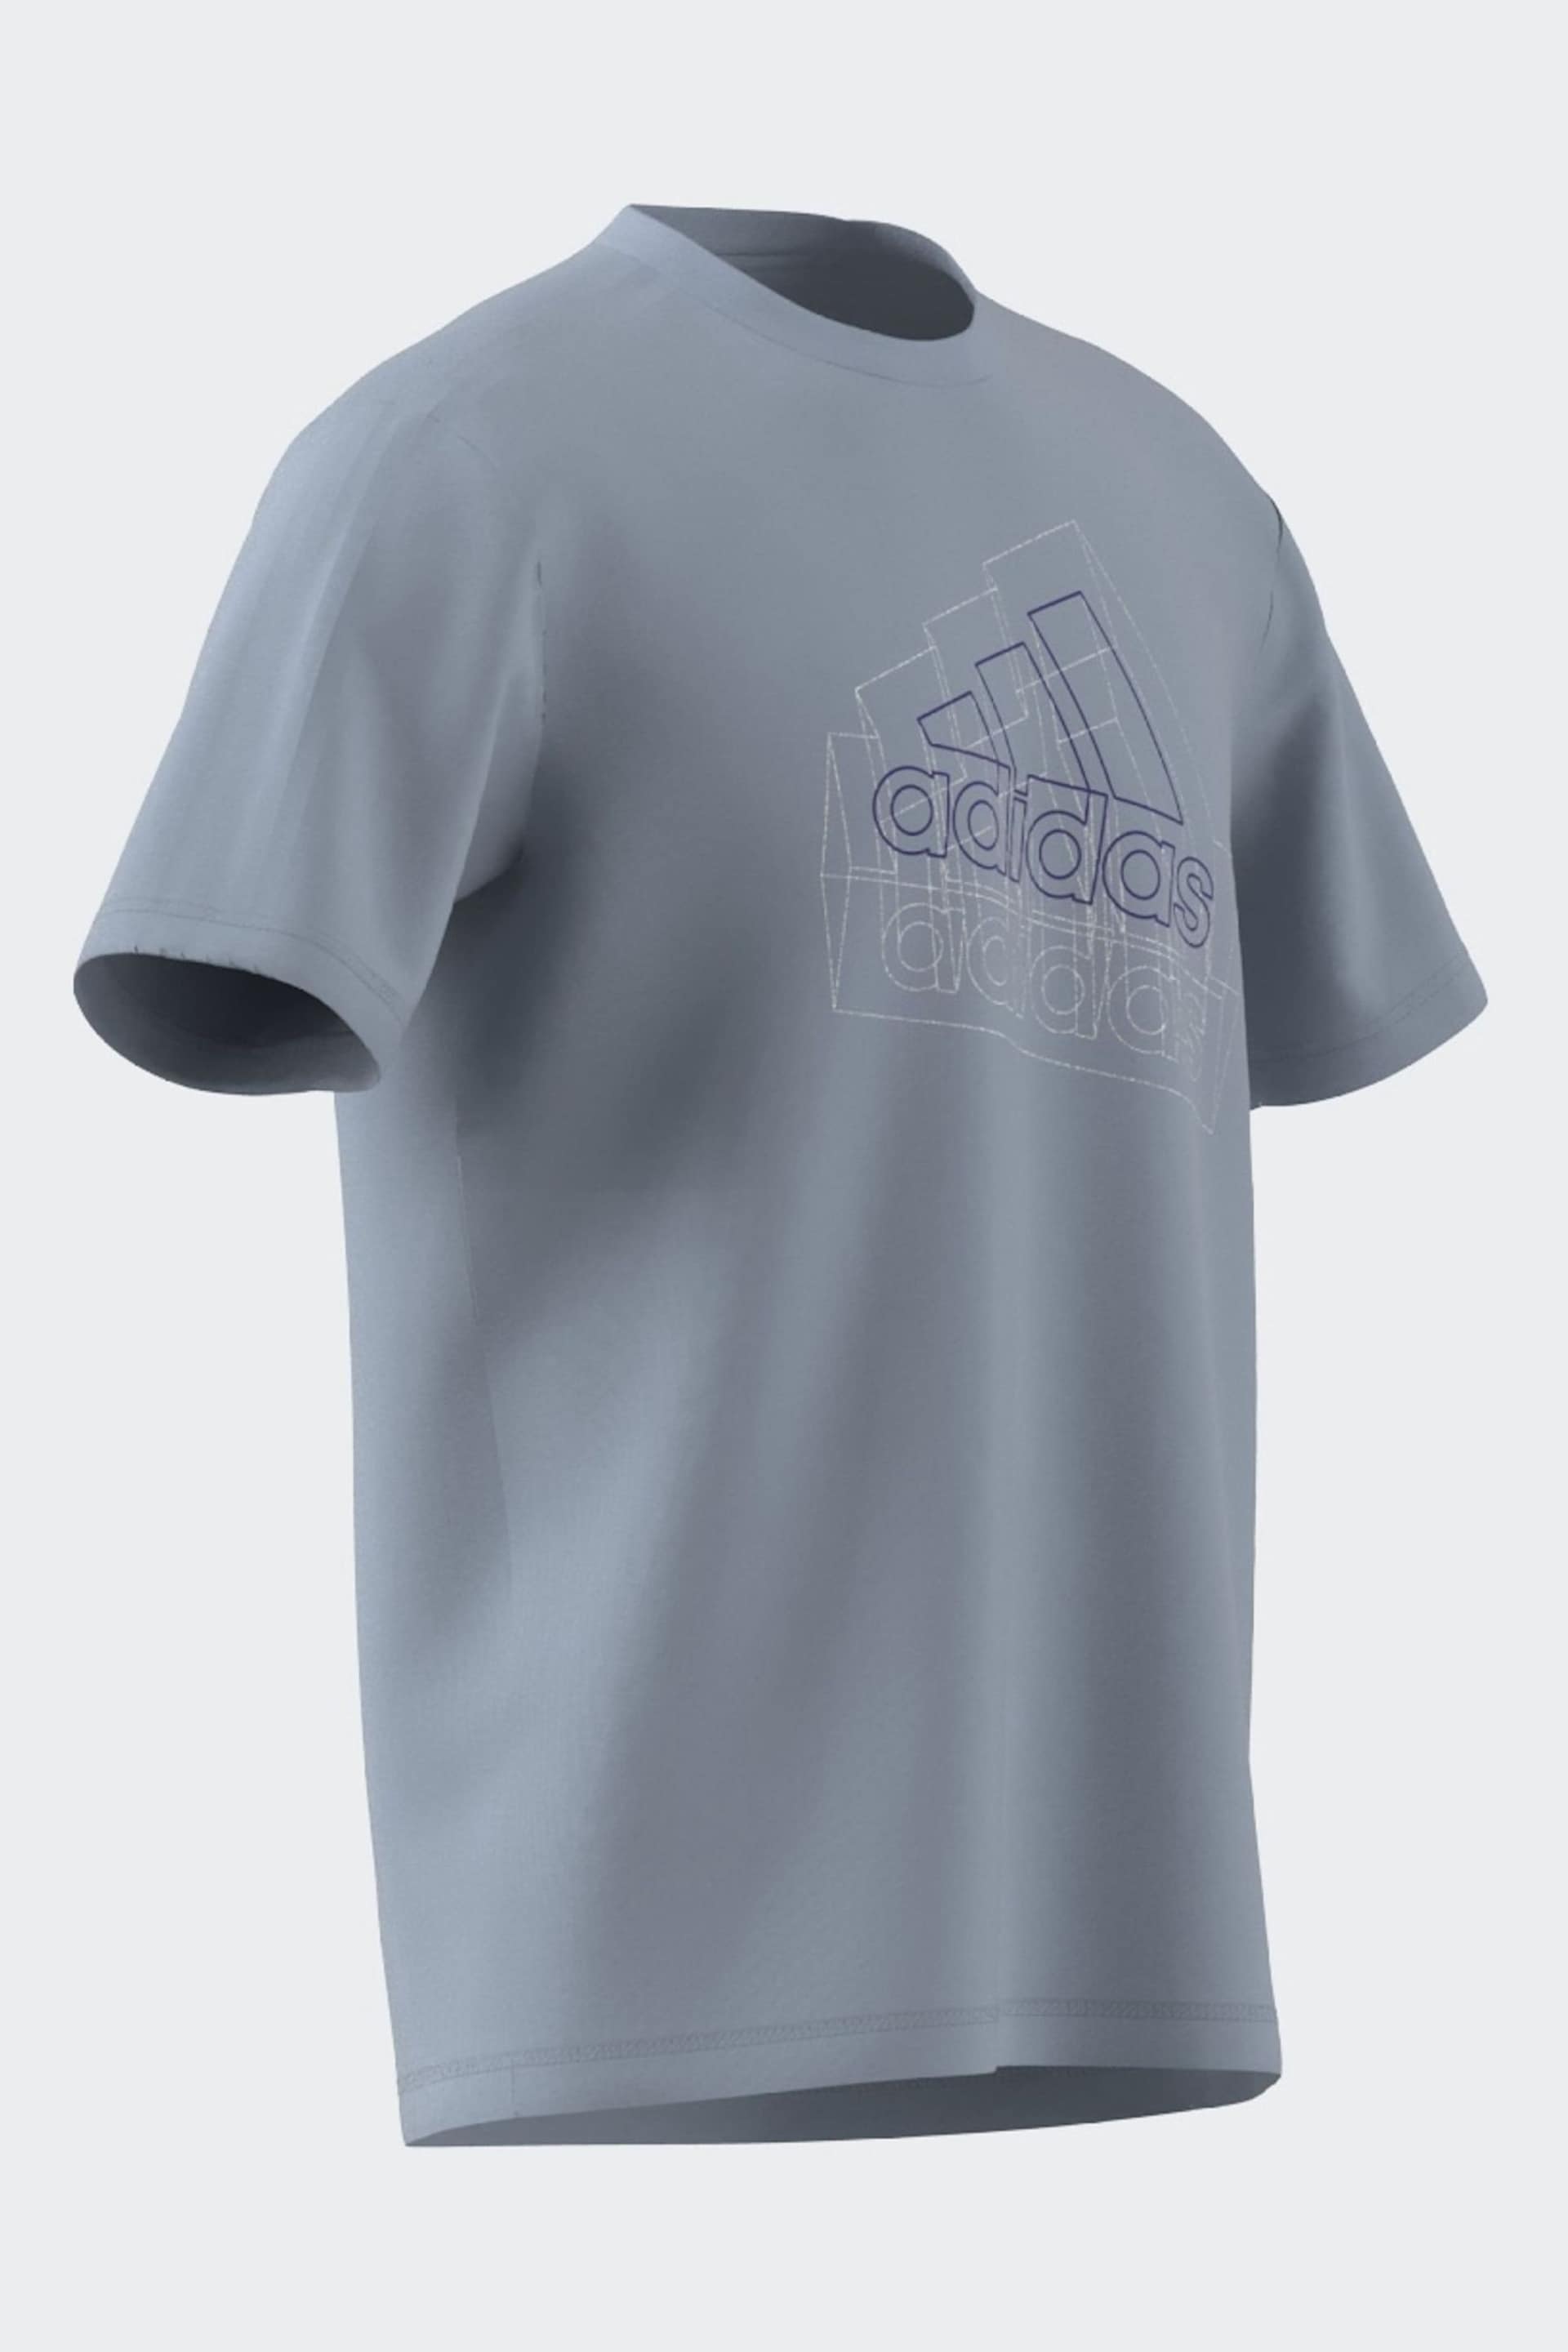 adidas Blue Multi Logo Graphic T-Shirt - Image 7 of 9